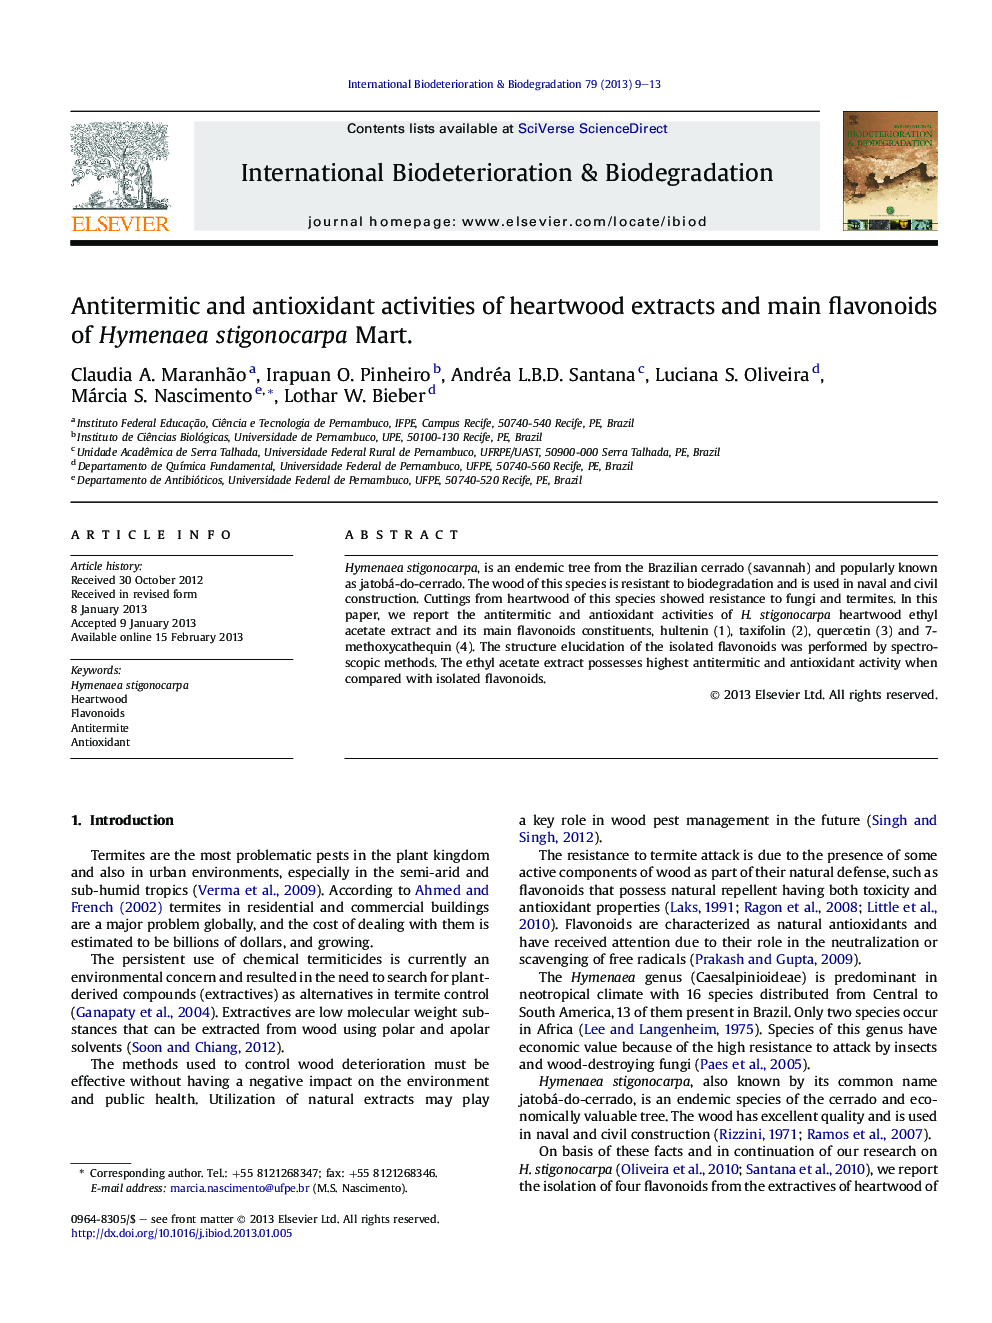 Antitermitic and antioxidant activities of heartwood extracts and main flavonoids of Hymenaea stigonocarpa Mart.